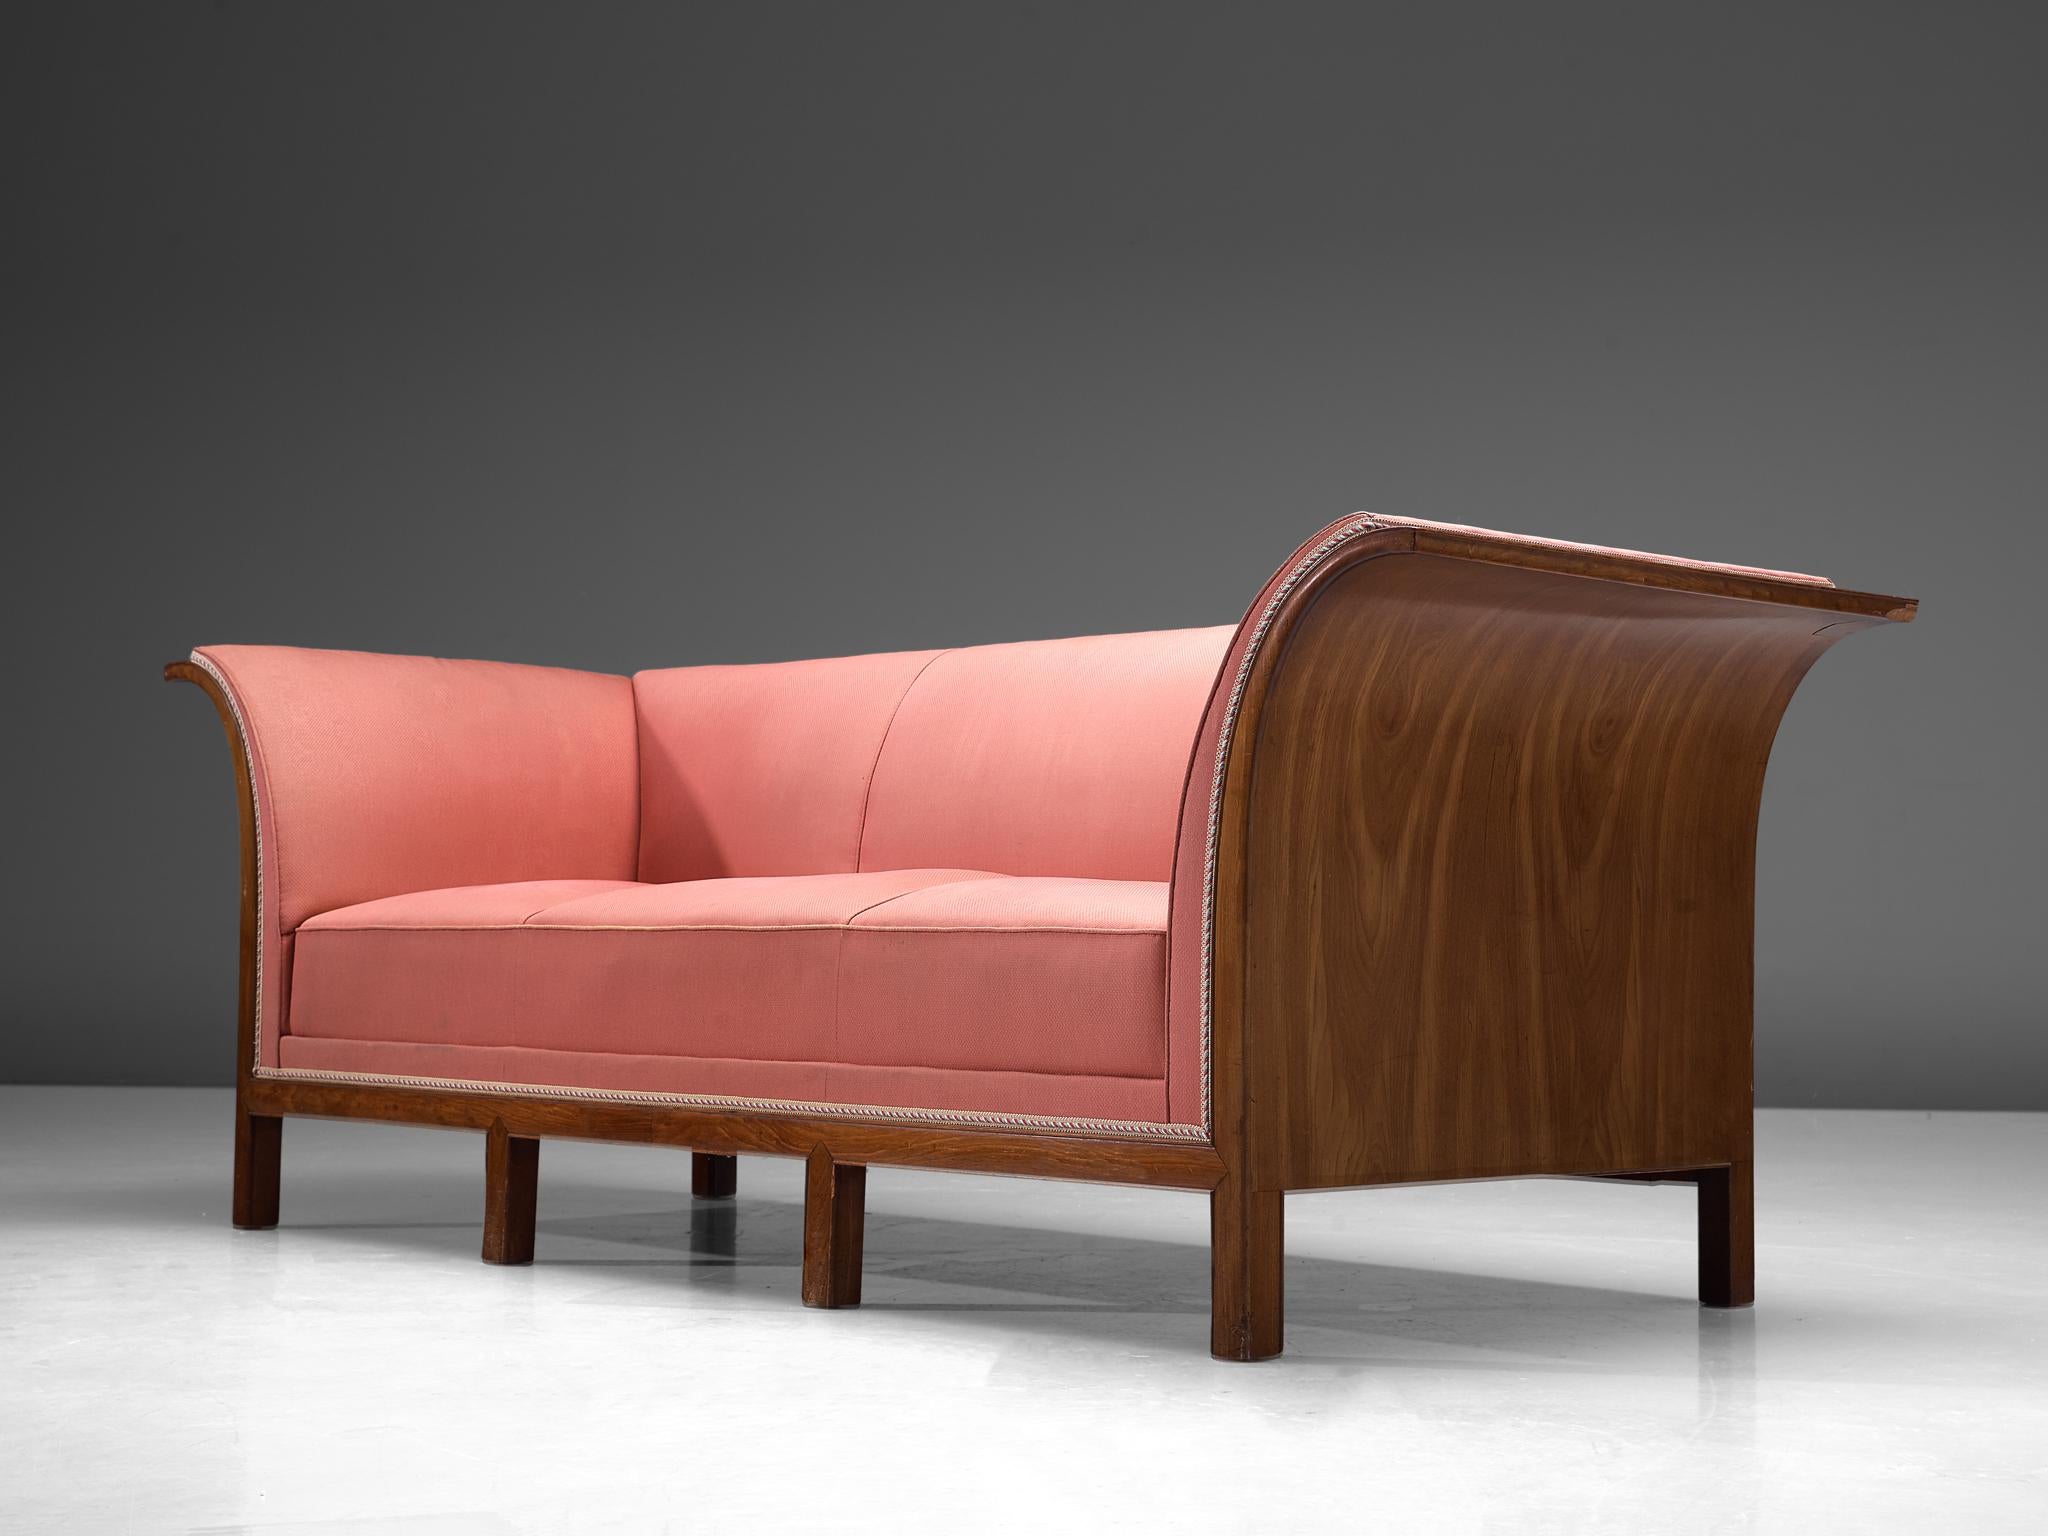 Scandinavian Modern Frits Henningsen Sofa in Mahogany and Pink Upholstery 